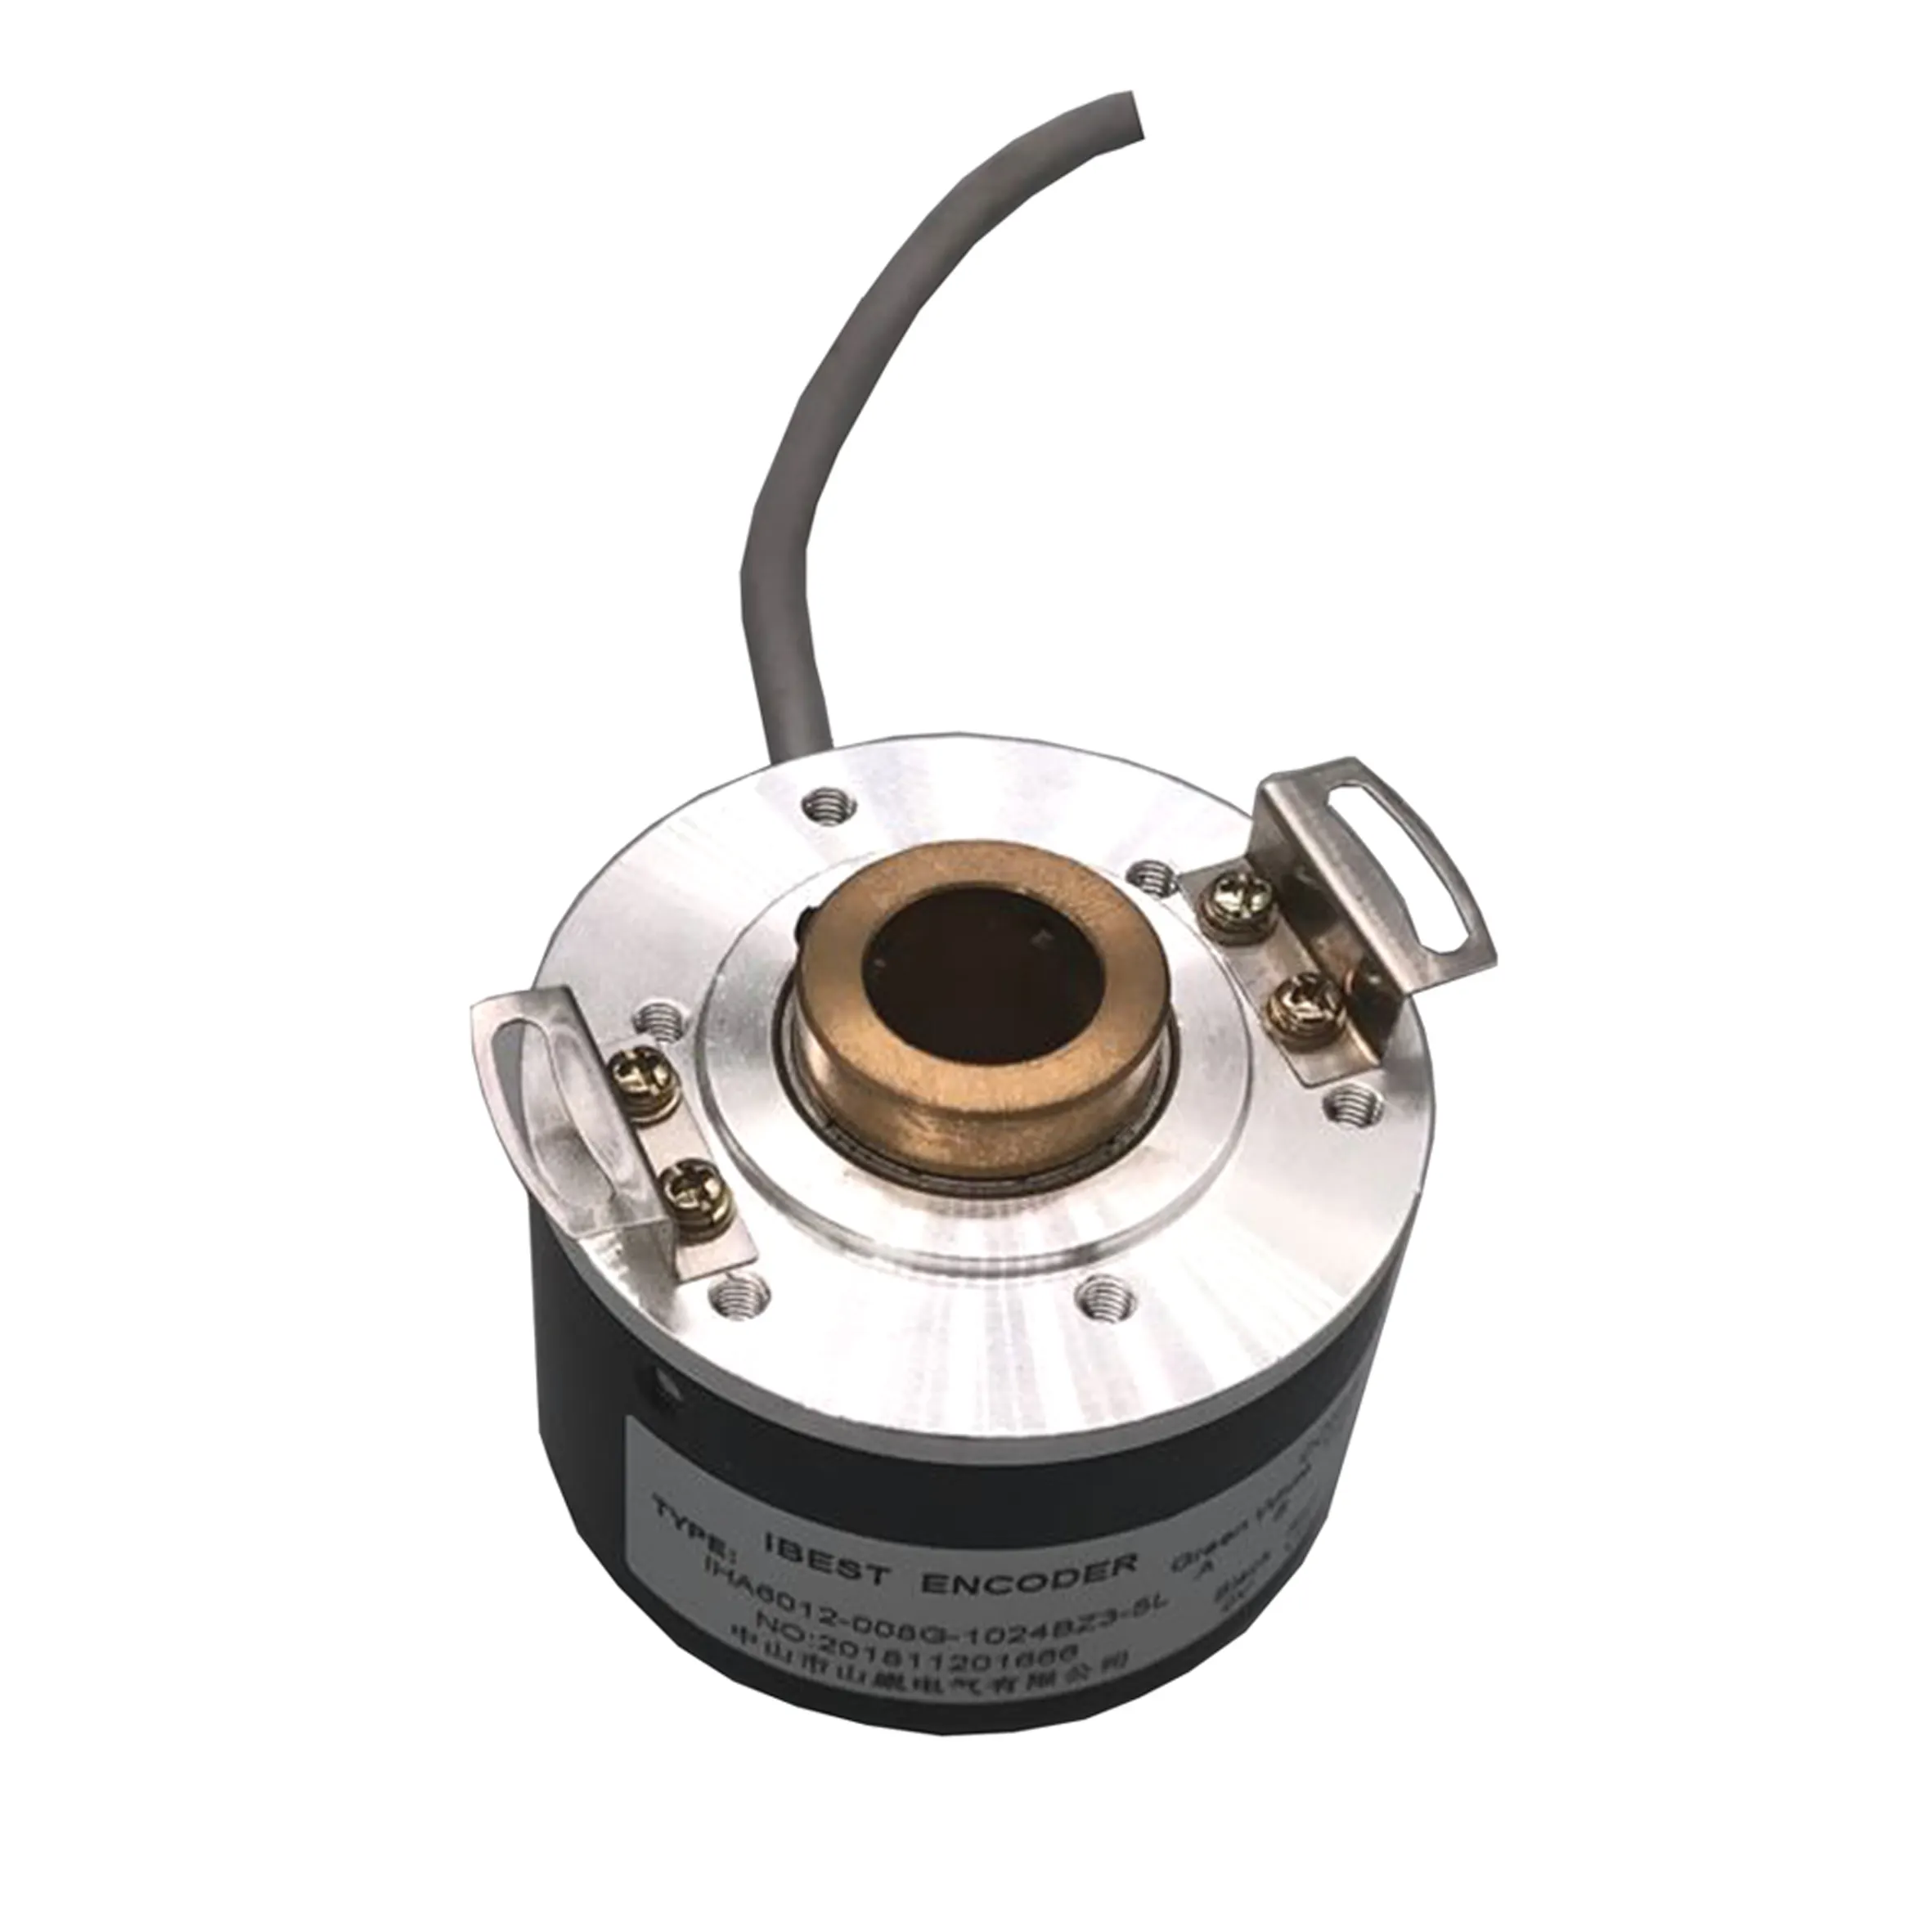 IHA6210 10mm 12mm Hollow Şaft Artımlı Optik Optik Motor Döner Kodlayıcı 1024/2048/2500PPR 5Vdc /12 V/24 V (IBEST)